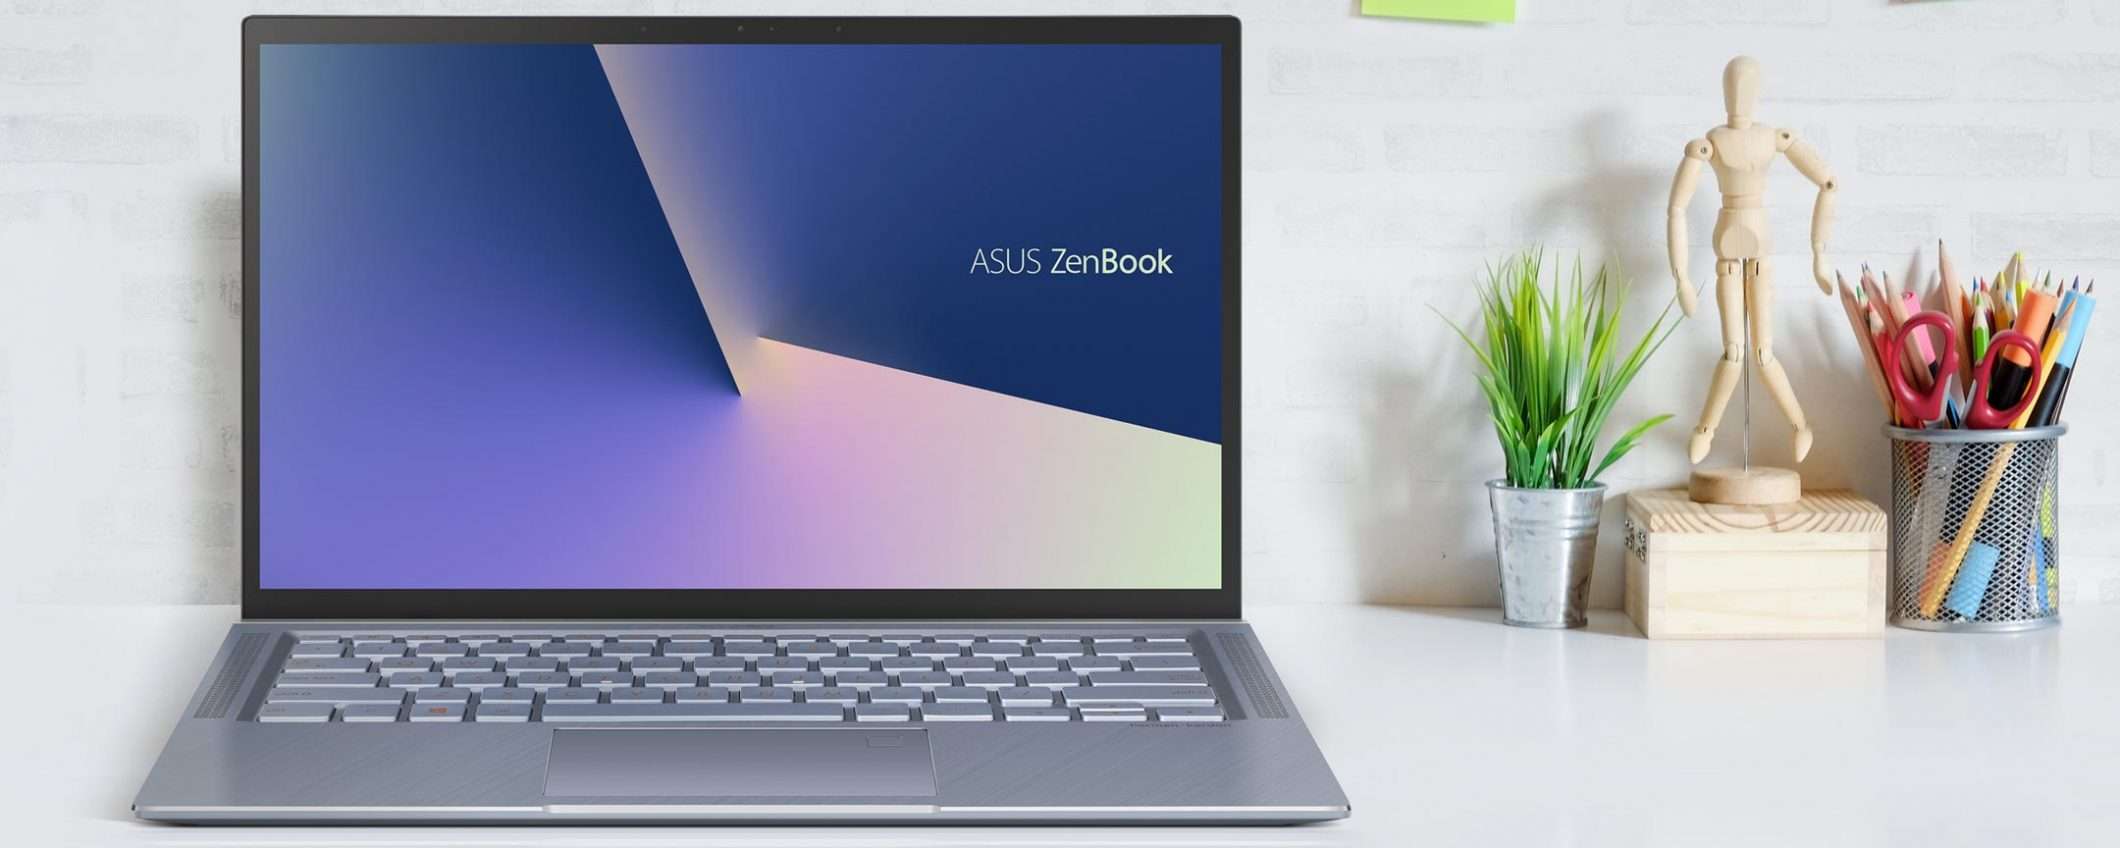 ASUS ZenBook 14 (UX431) arriva oggi in Italia